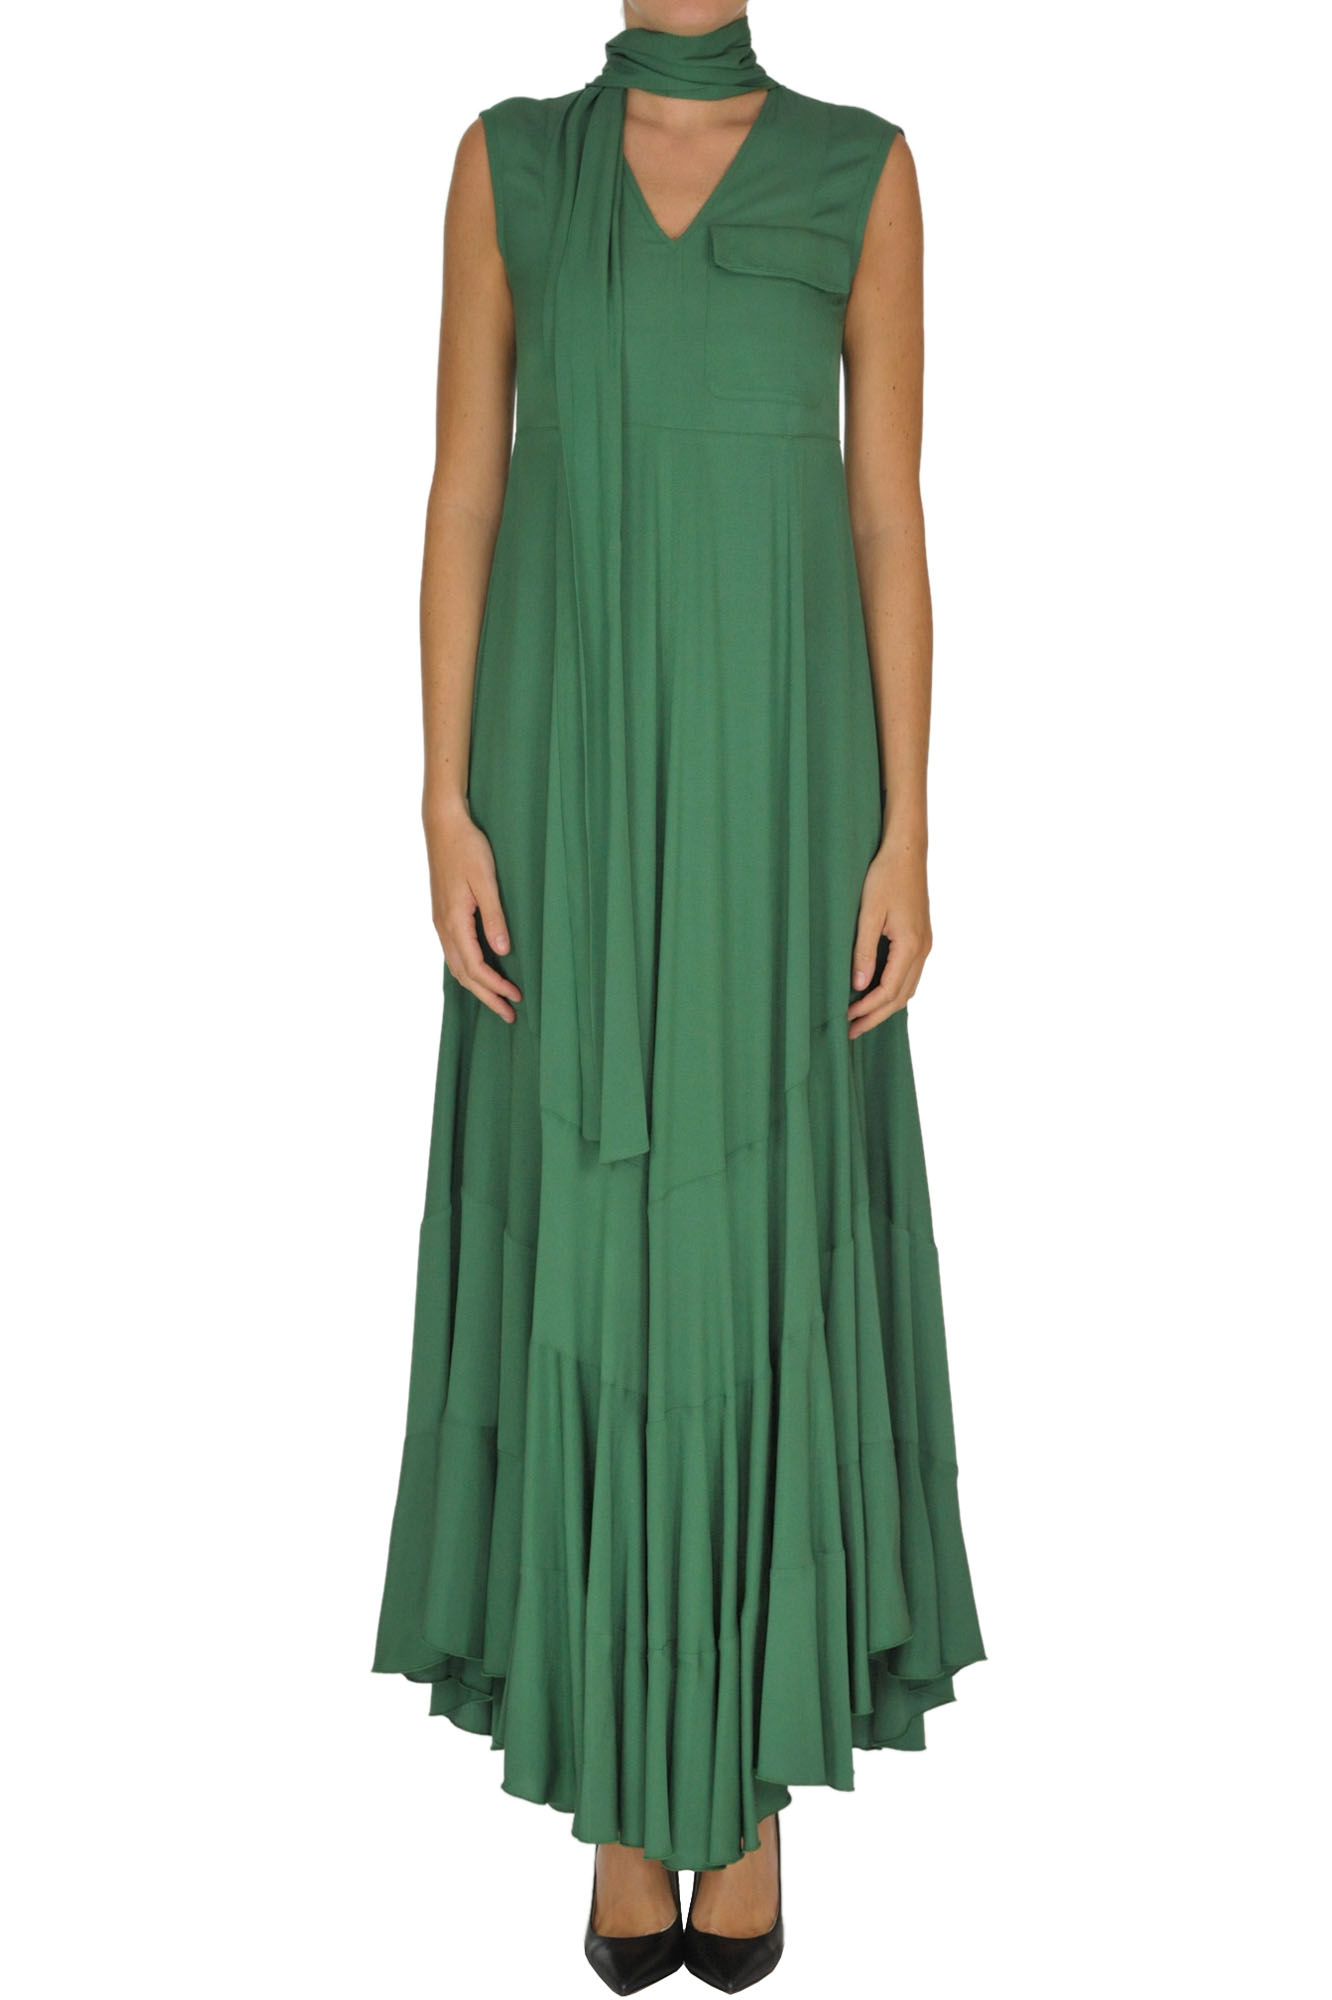 Golden Goose Deluxe Brand Viscose long dress - Buy online on Glamest ...